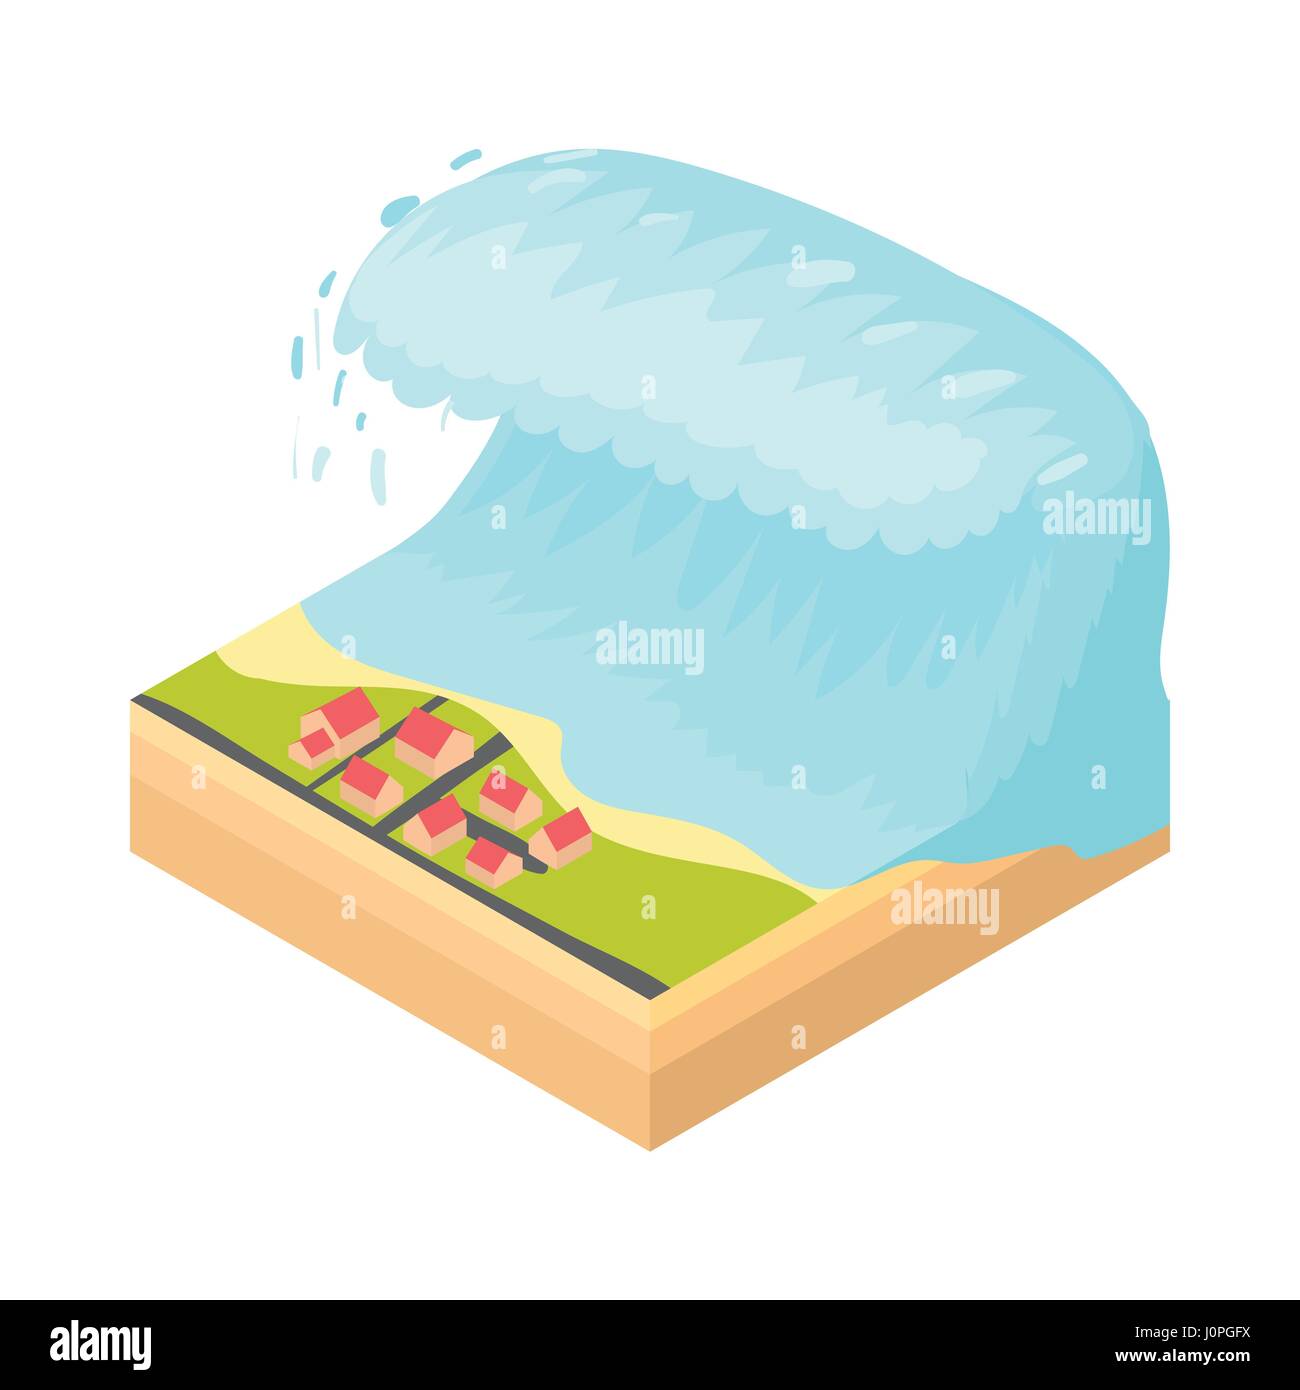 Ola De Tsunami Icono De Estilo De Dibujos Animados Imagen Vector De Stock Alamy